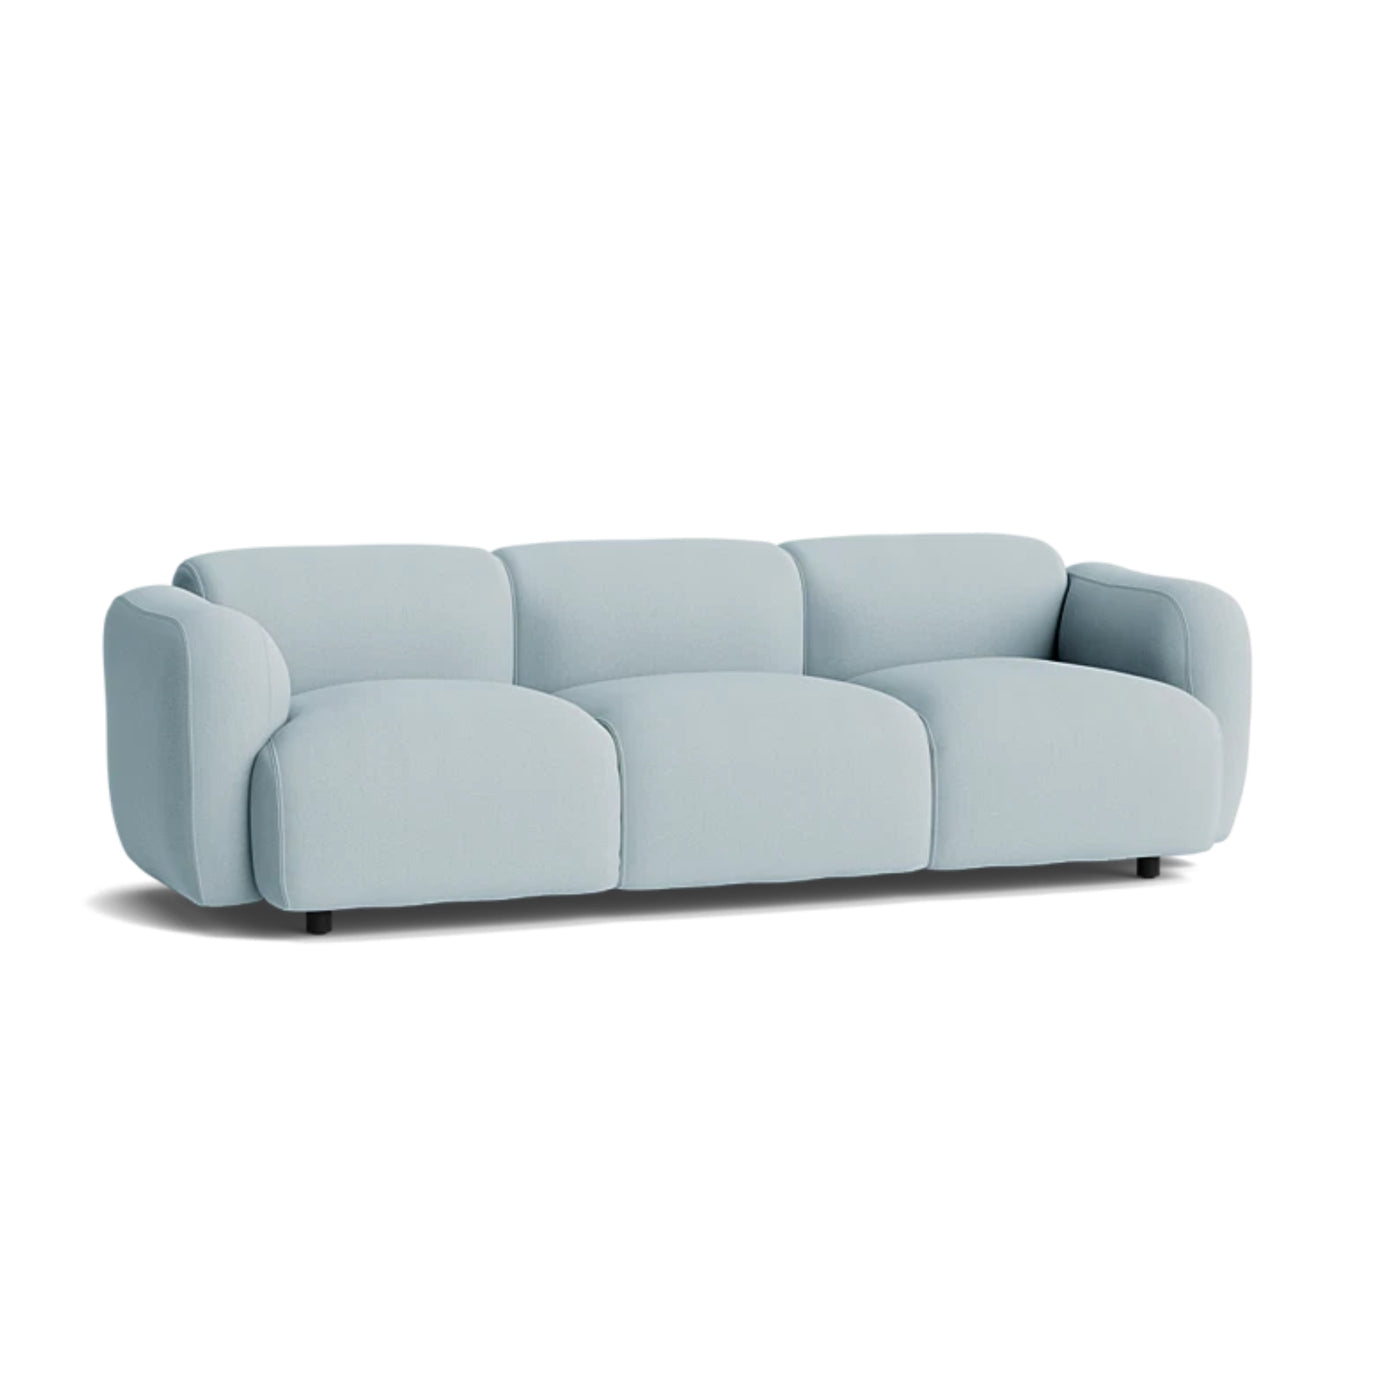 Normann Copenhagen Swell 3 Seater Sofa at someday designs. #colour_steelcut-trio-713